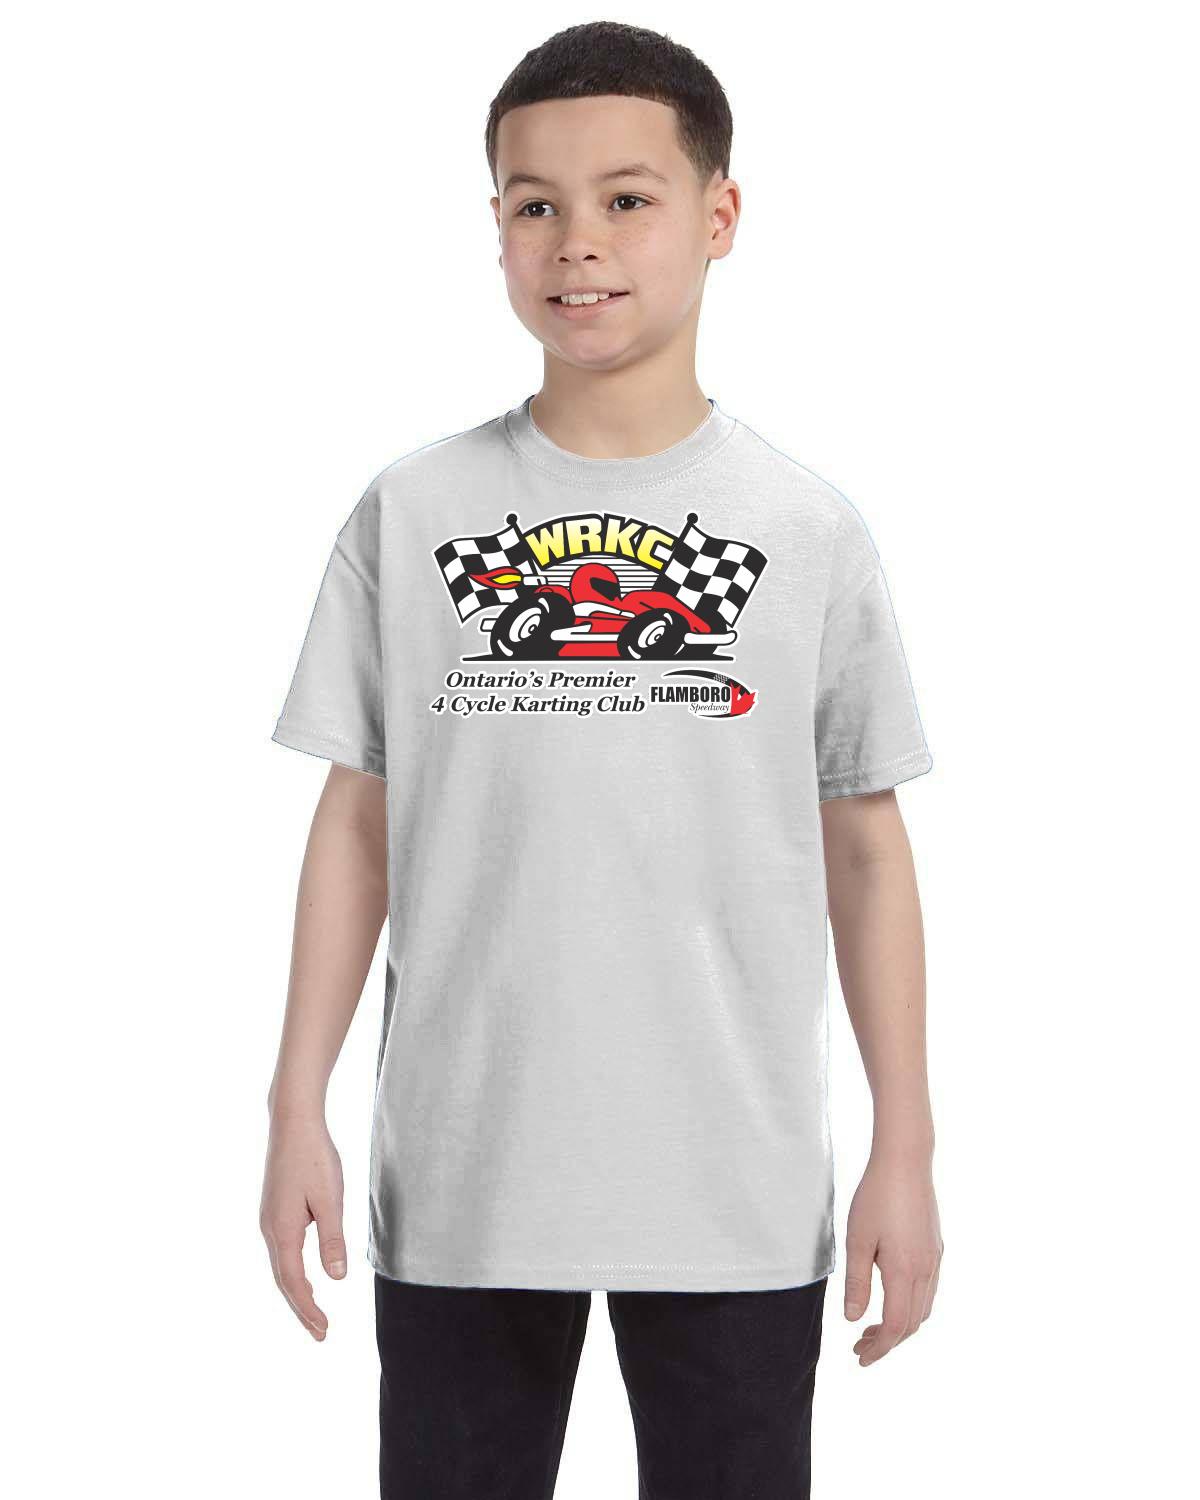 WRKC Kart Club Youth shirt